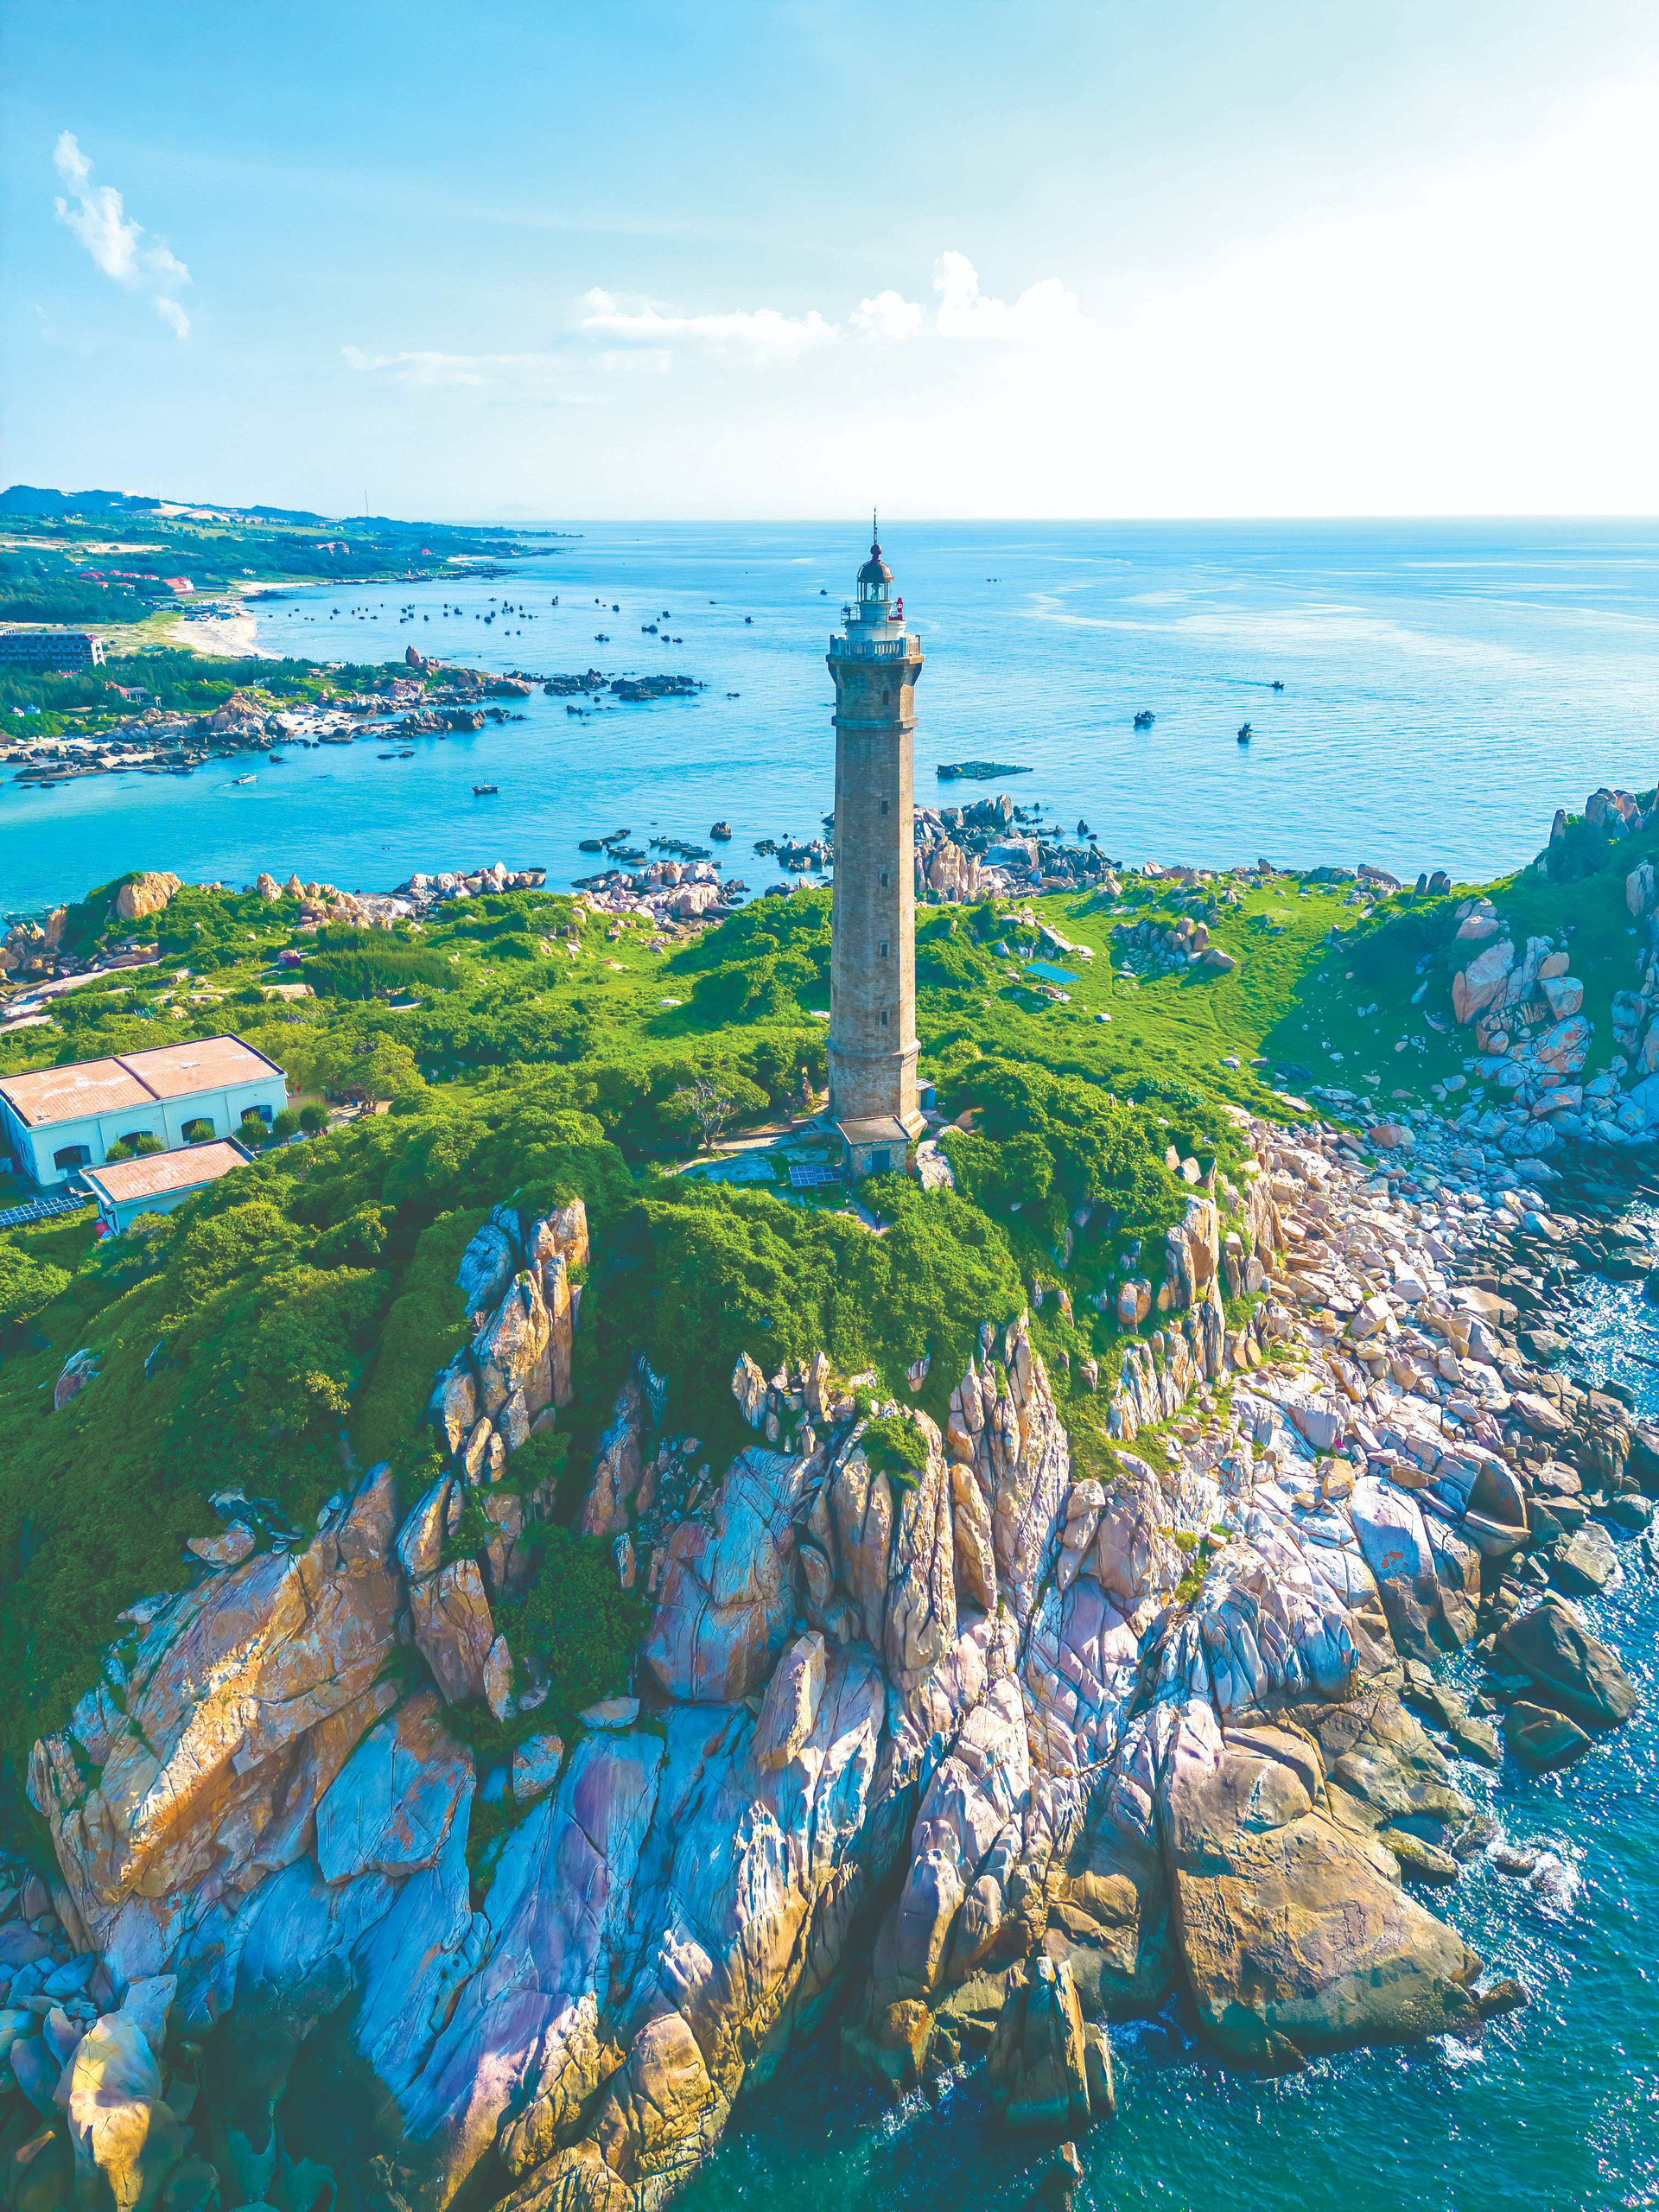 ke-ga-beach-mui-ne-phan-thiet-binh-thuan-vietnam-ke-ga-cape-lighthouse-is-most-favourite-destination-visitors-la-gi-binh-thuan-province-selective-focus-travel-concept-compressed.jpg